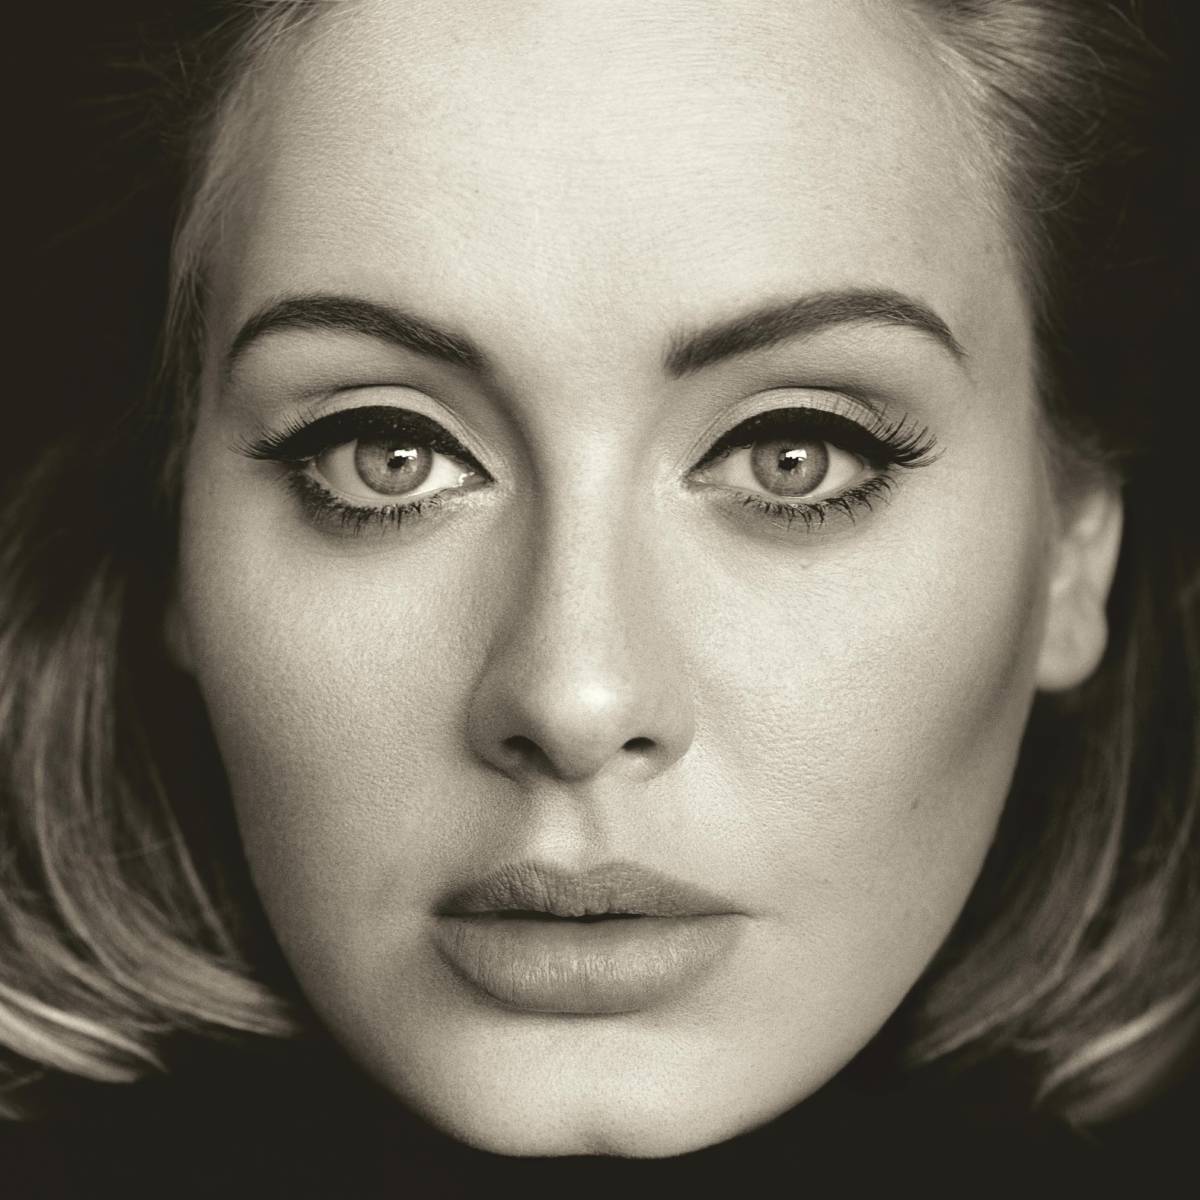 "25" (Cover des dritten Studioalbums von Adele)